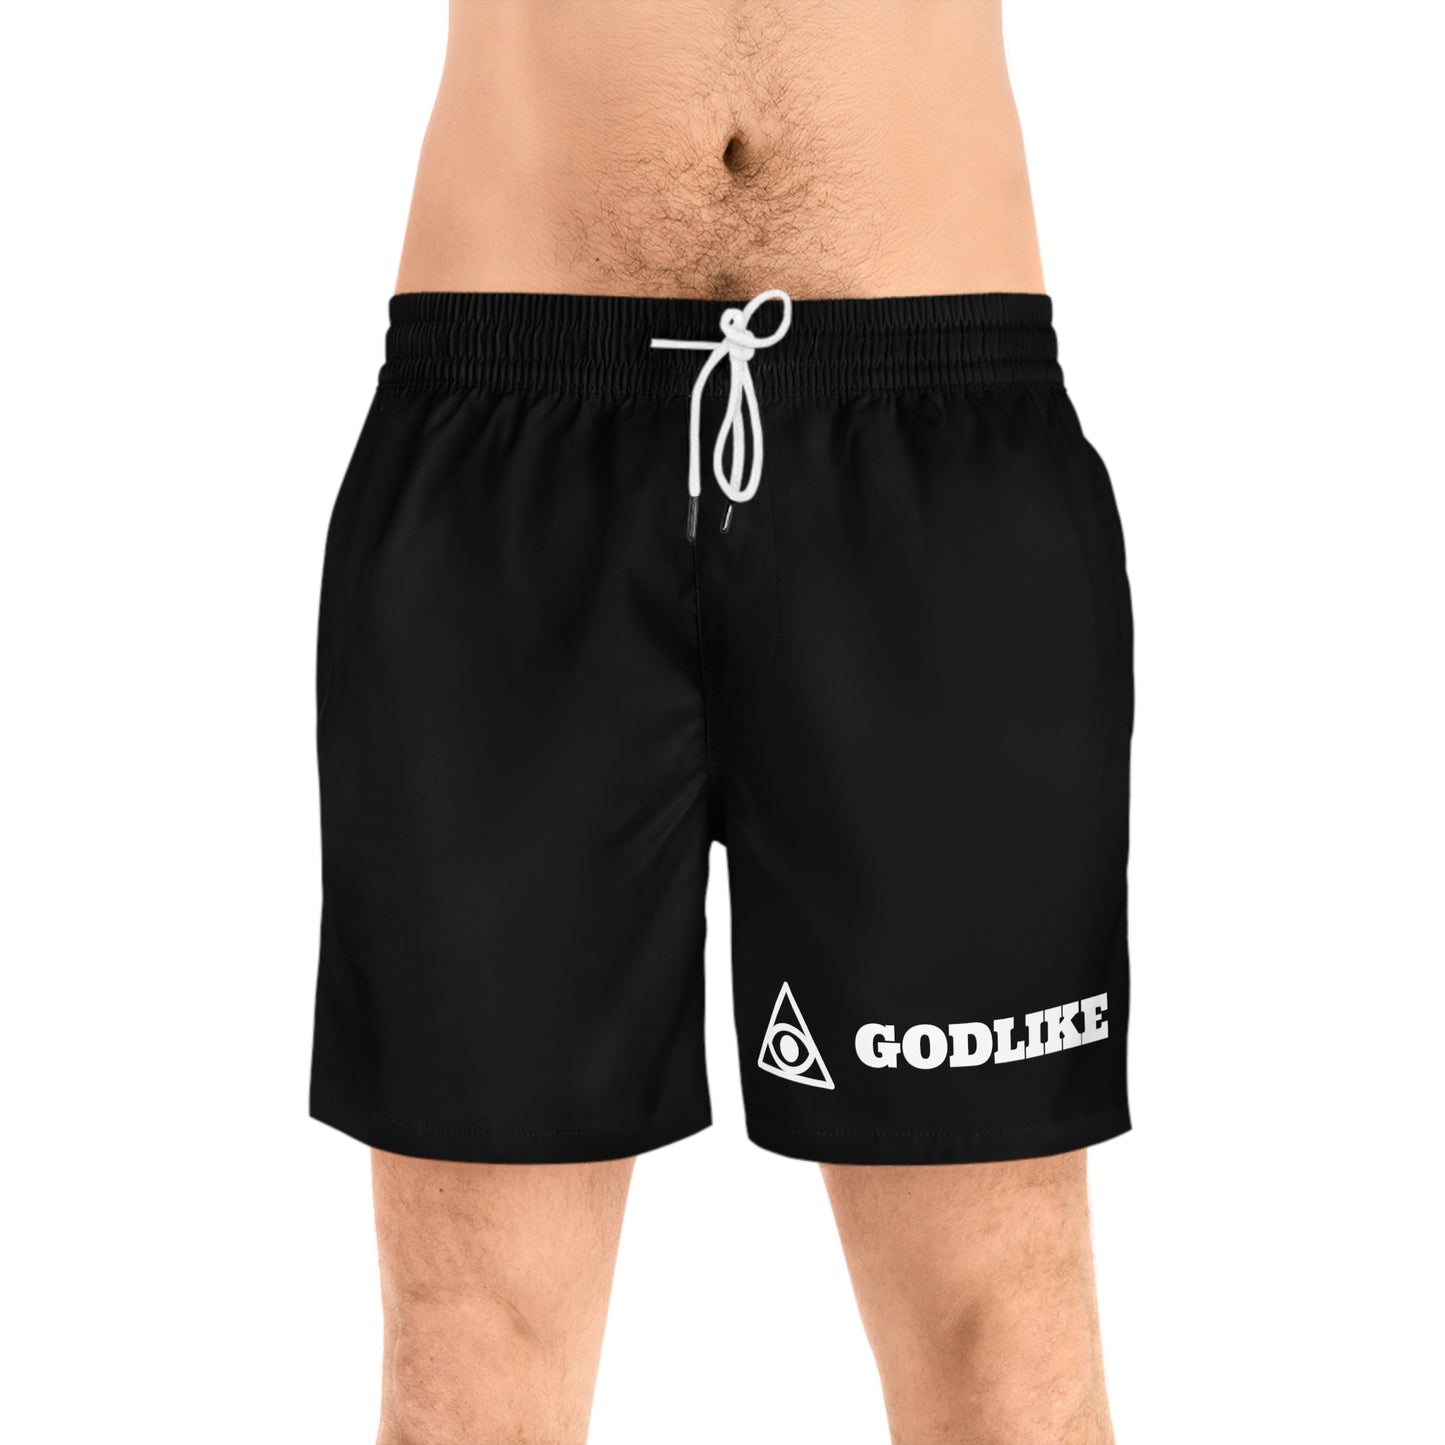 Black "Godlike" Swim Shorts